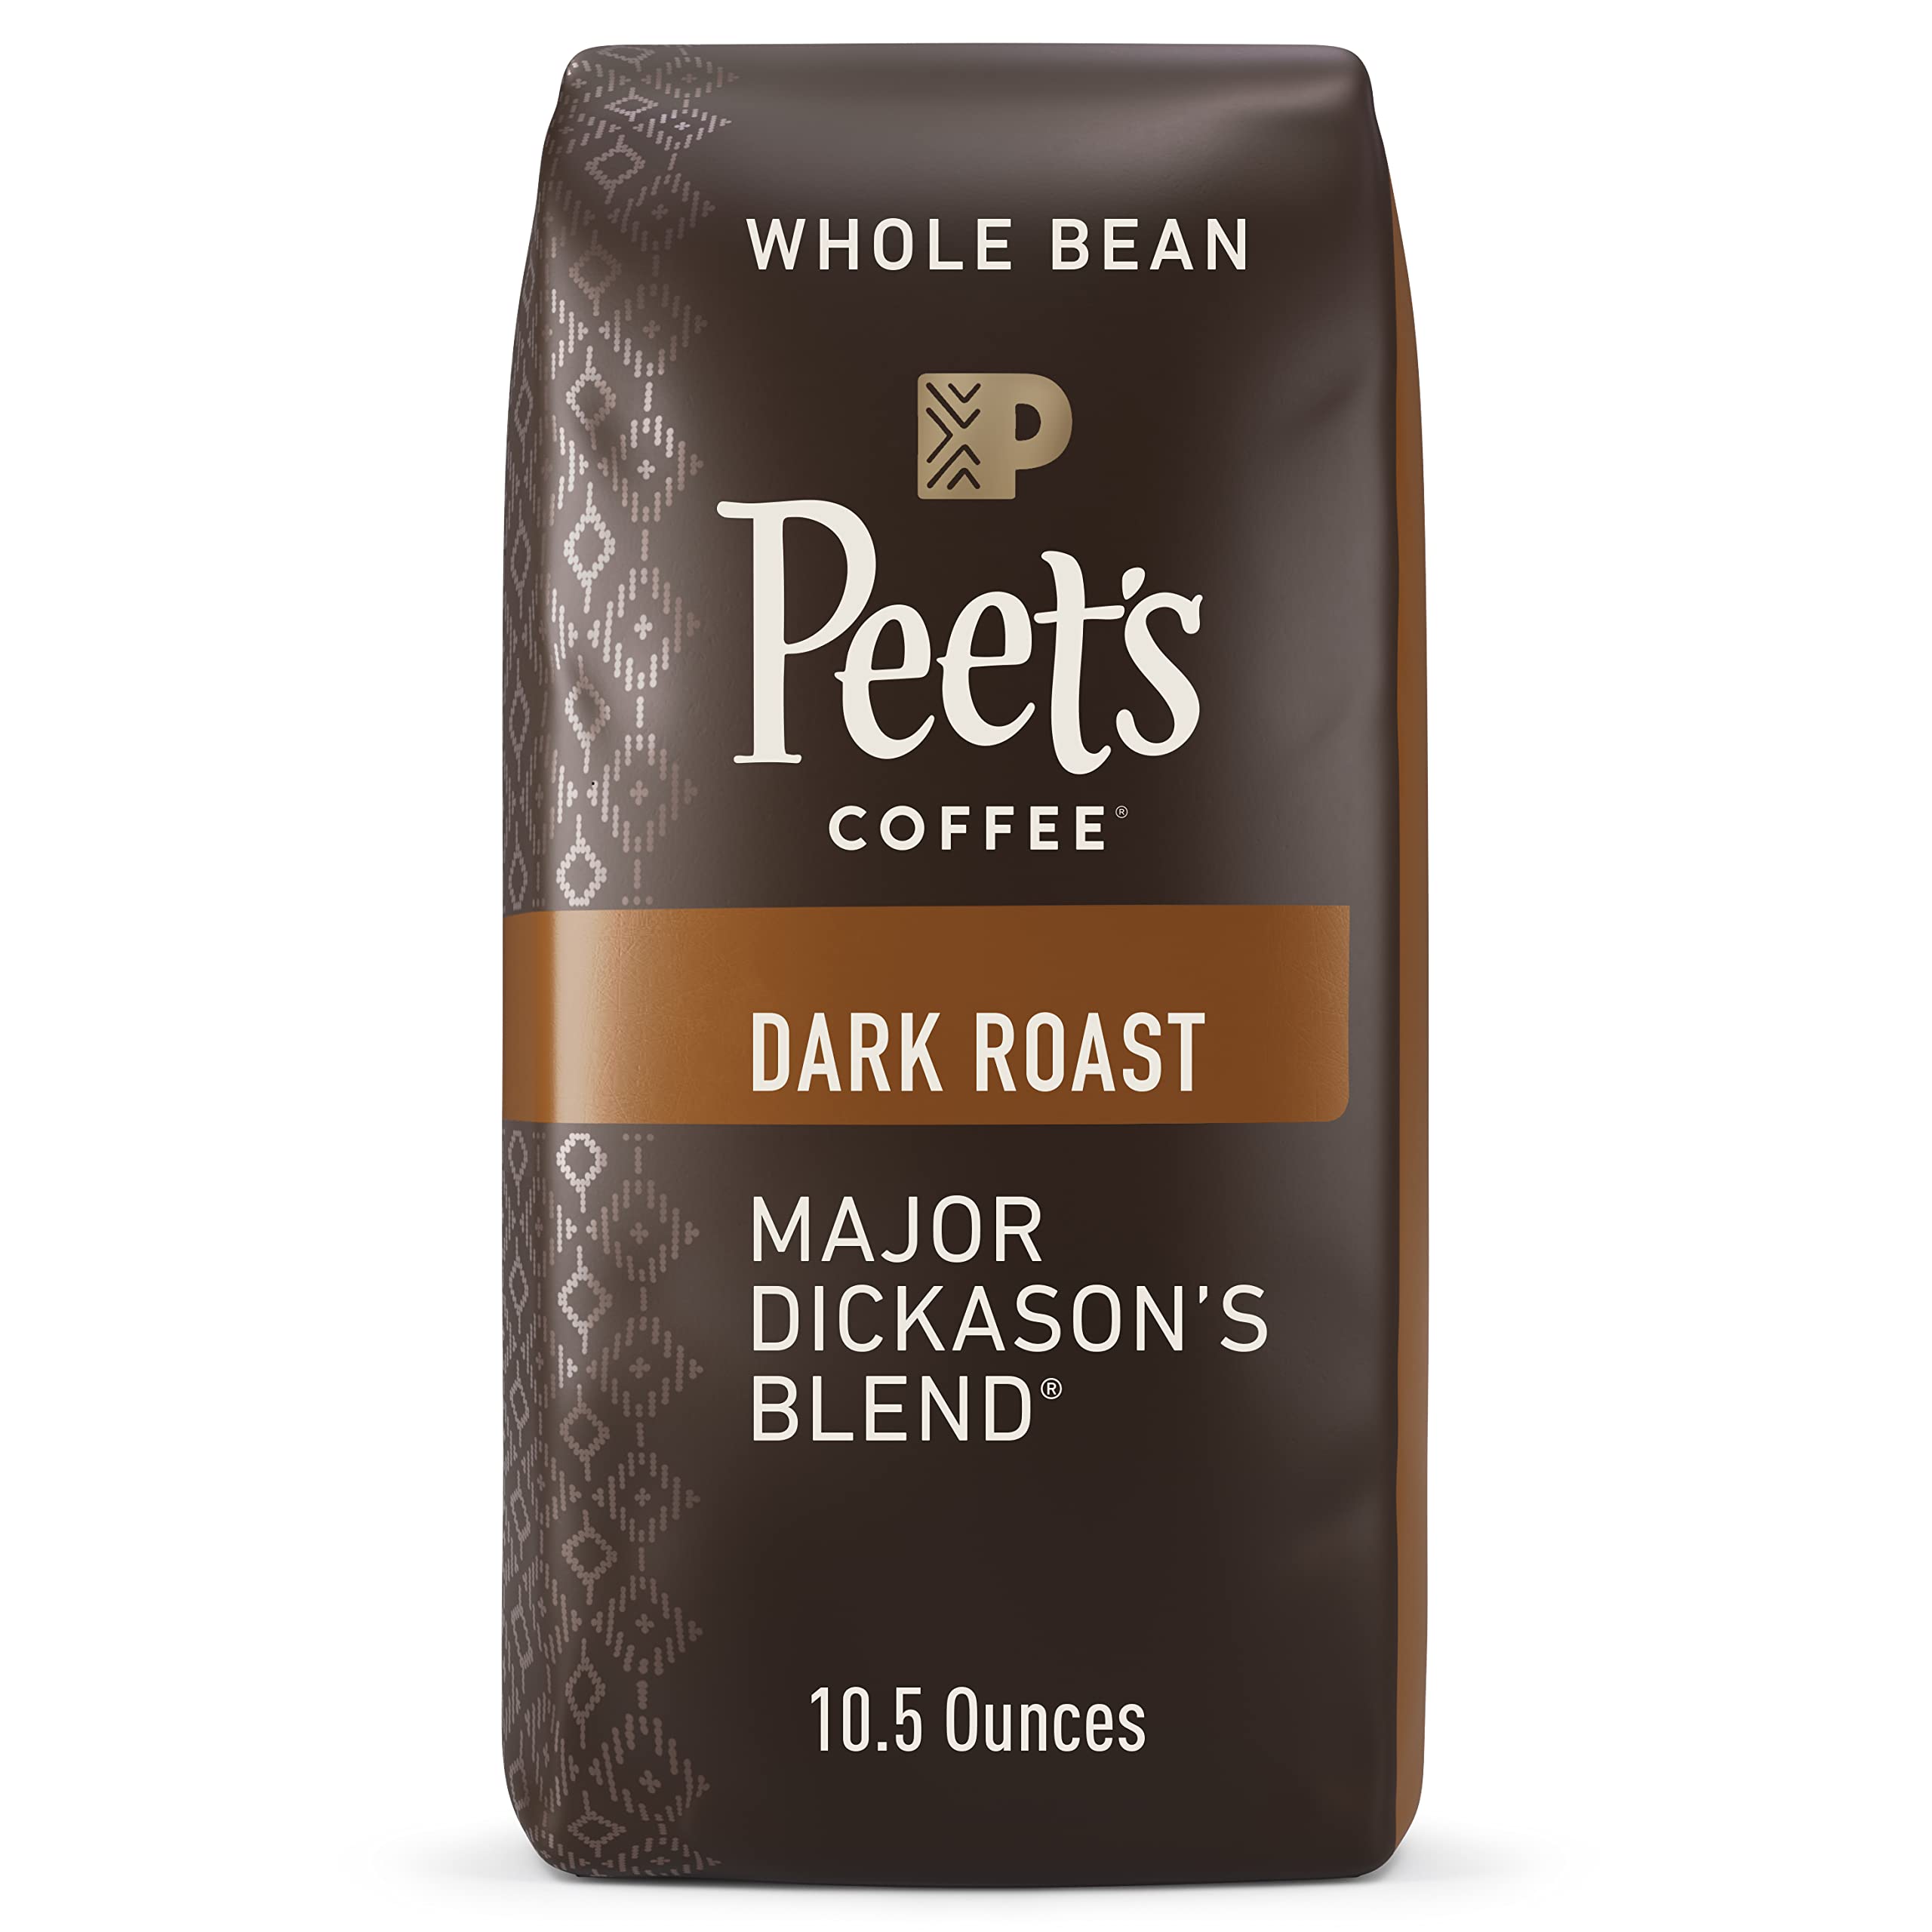 10.5-Oz Peet's Coffee Dark Roast Whole Bean Coffee (Major Dickason's Blend) $5.42 w/ S&S + Free Shipping w/ Prime or on $35+